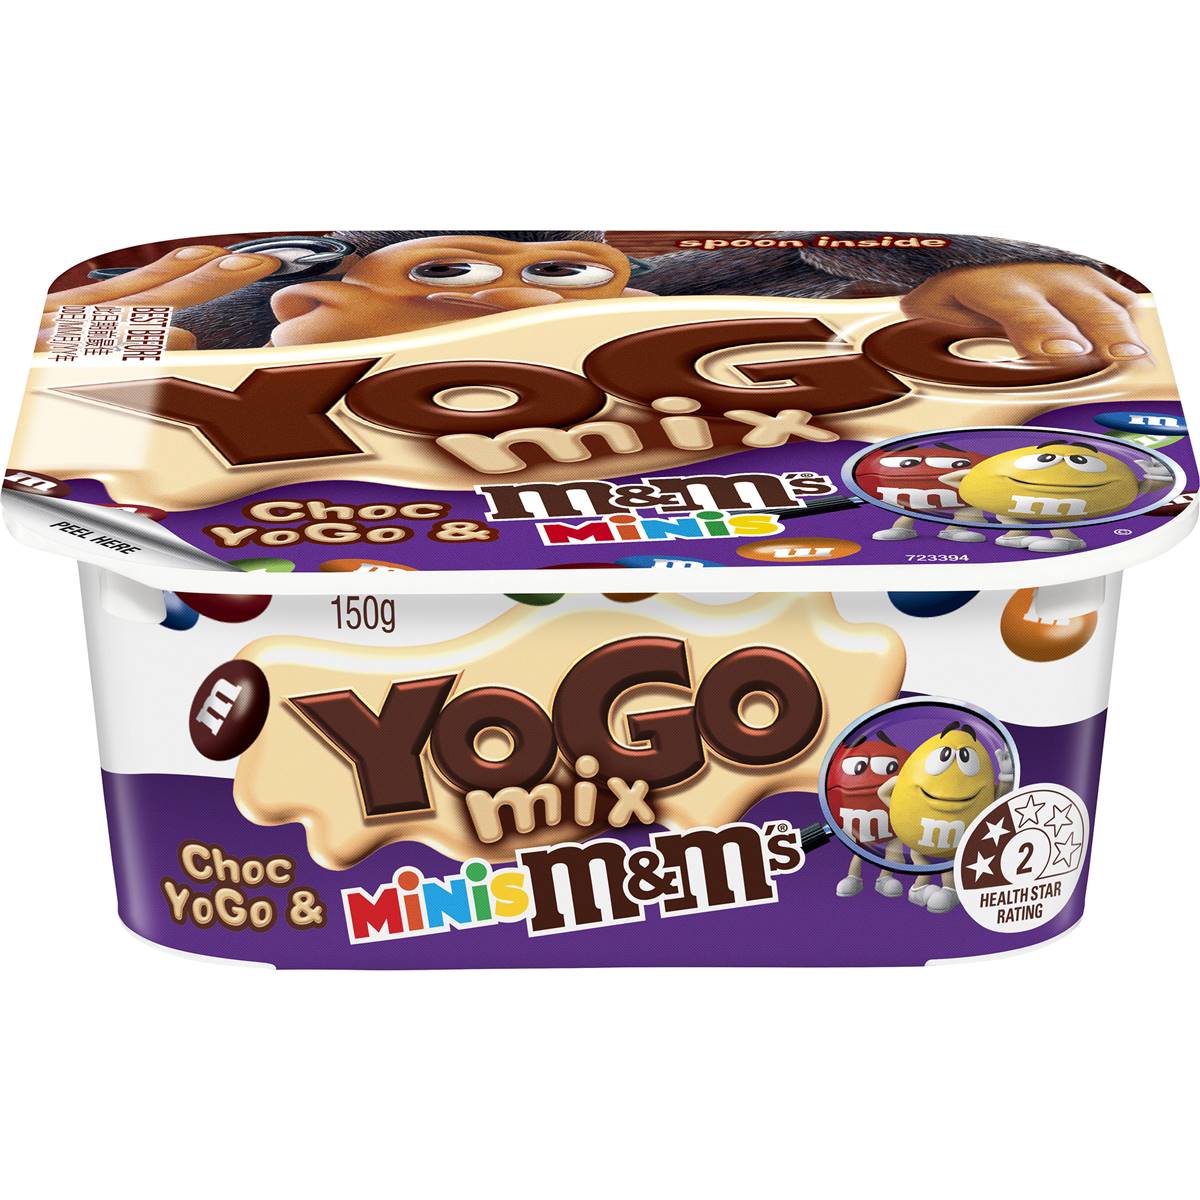 Calories in Yogo Chocolate With Mini M&m's Custard Dessert